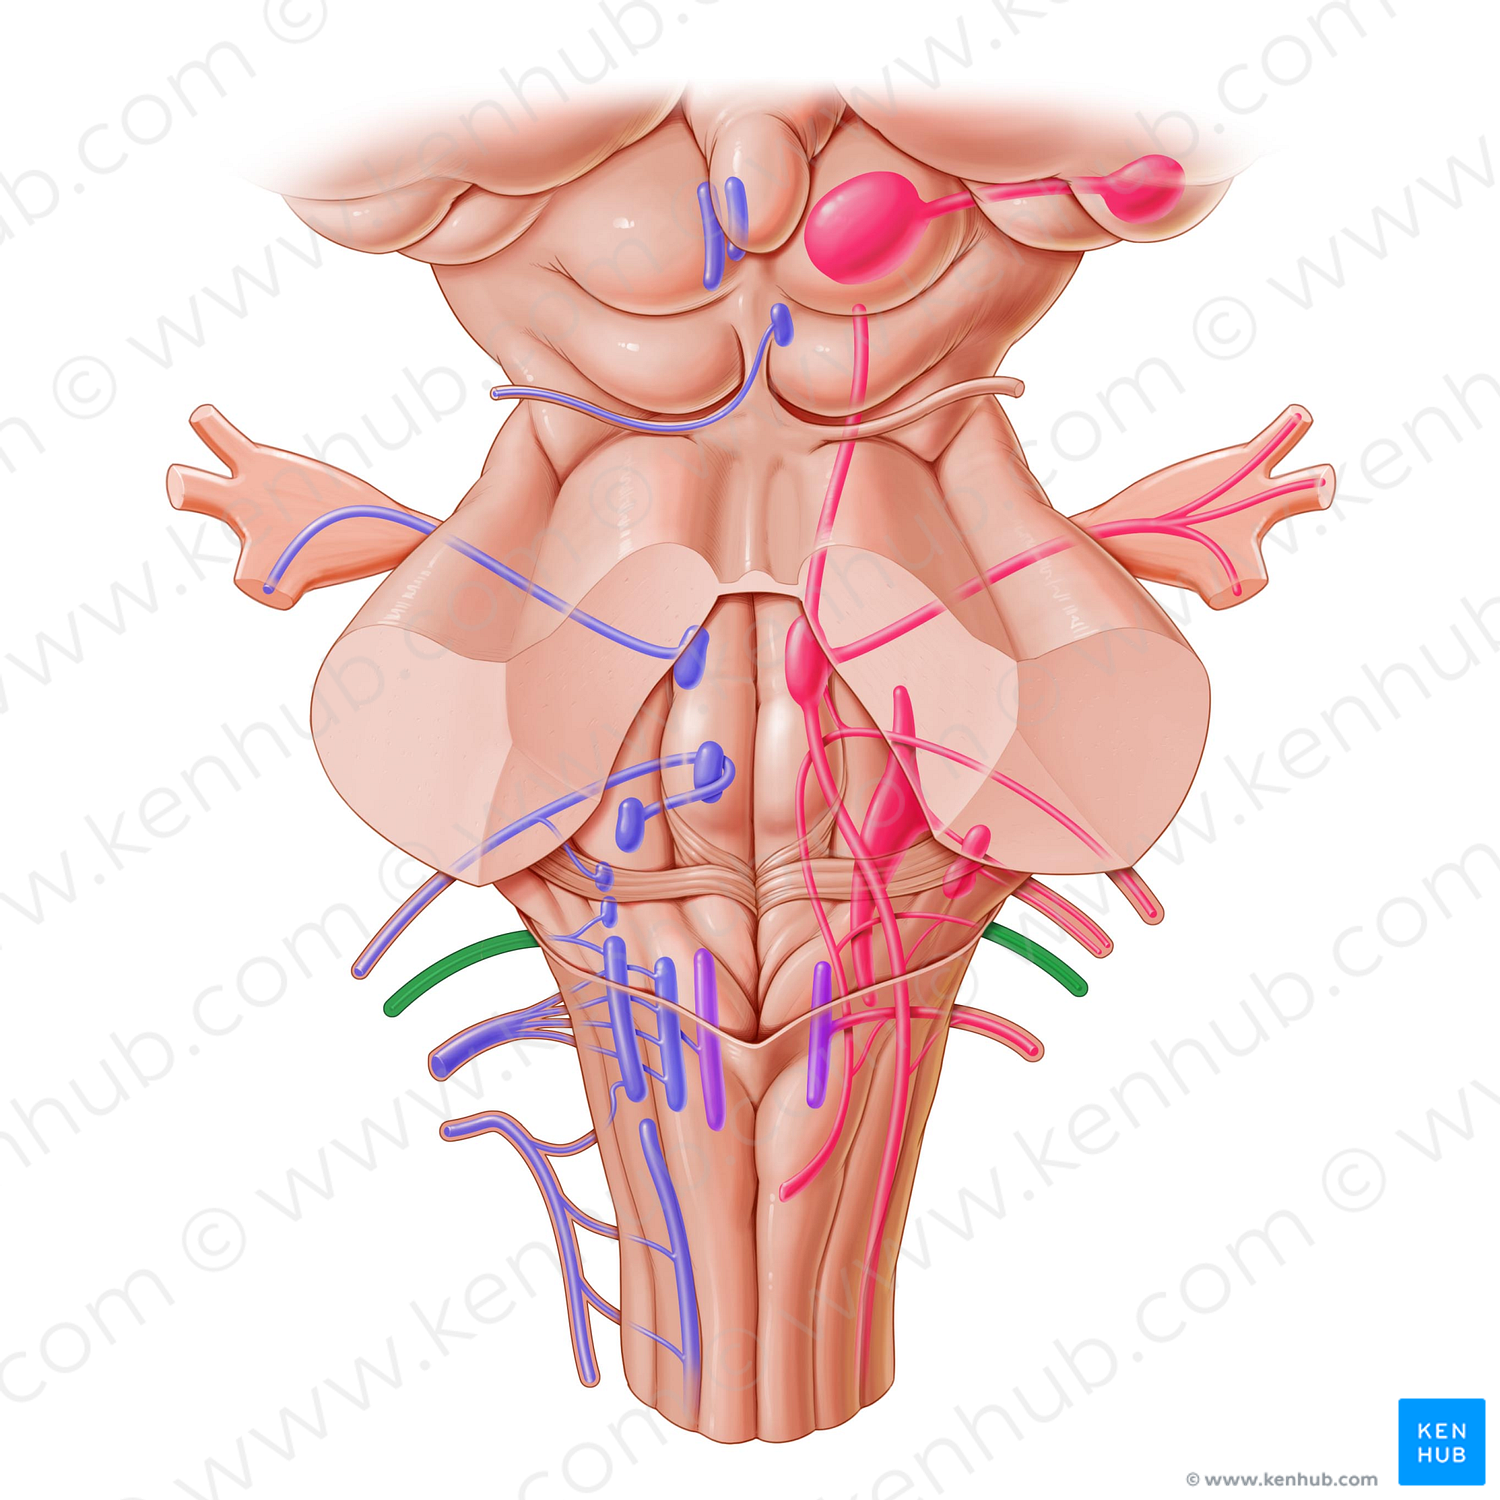 Glossopharyngeal nerve (#6441)